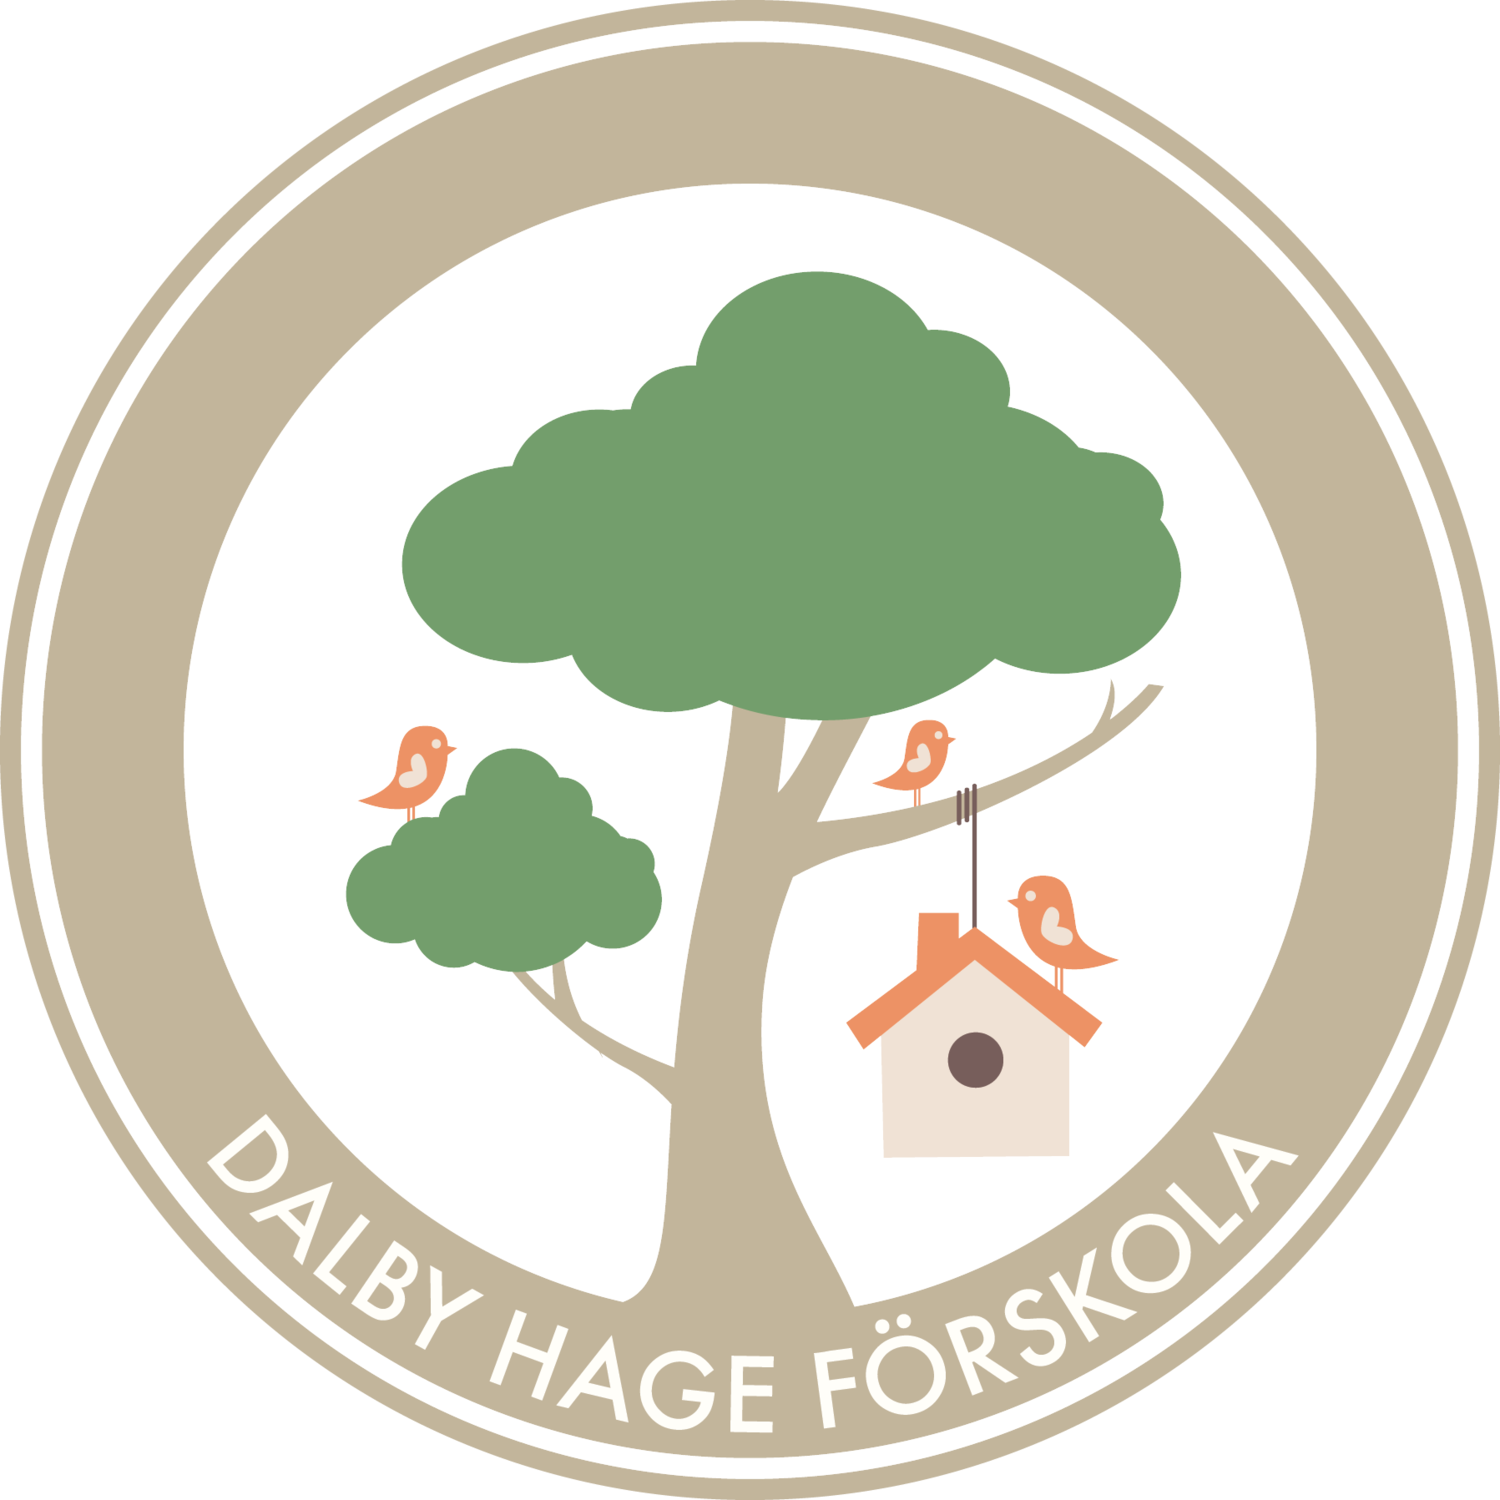 Dalby Hage Förskola i Dalby, Uppsala